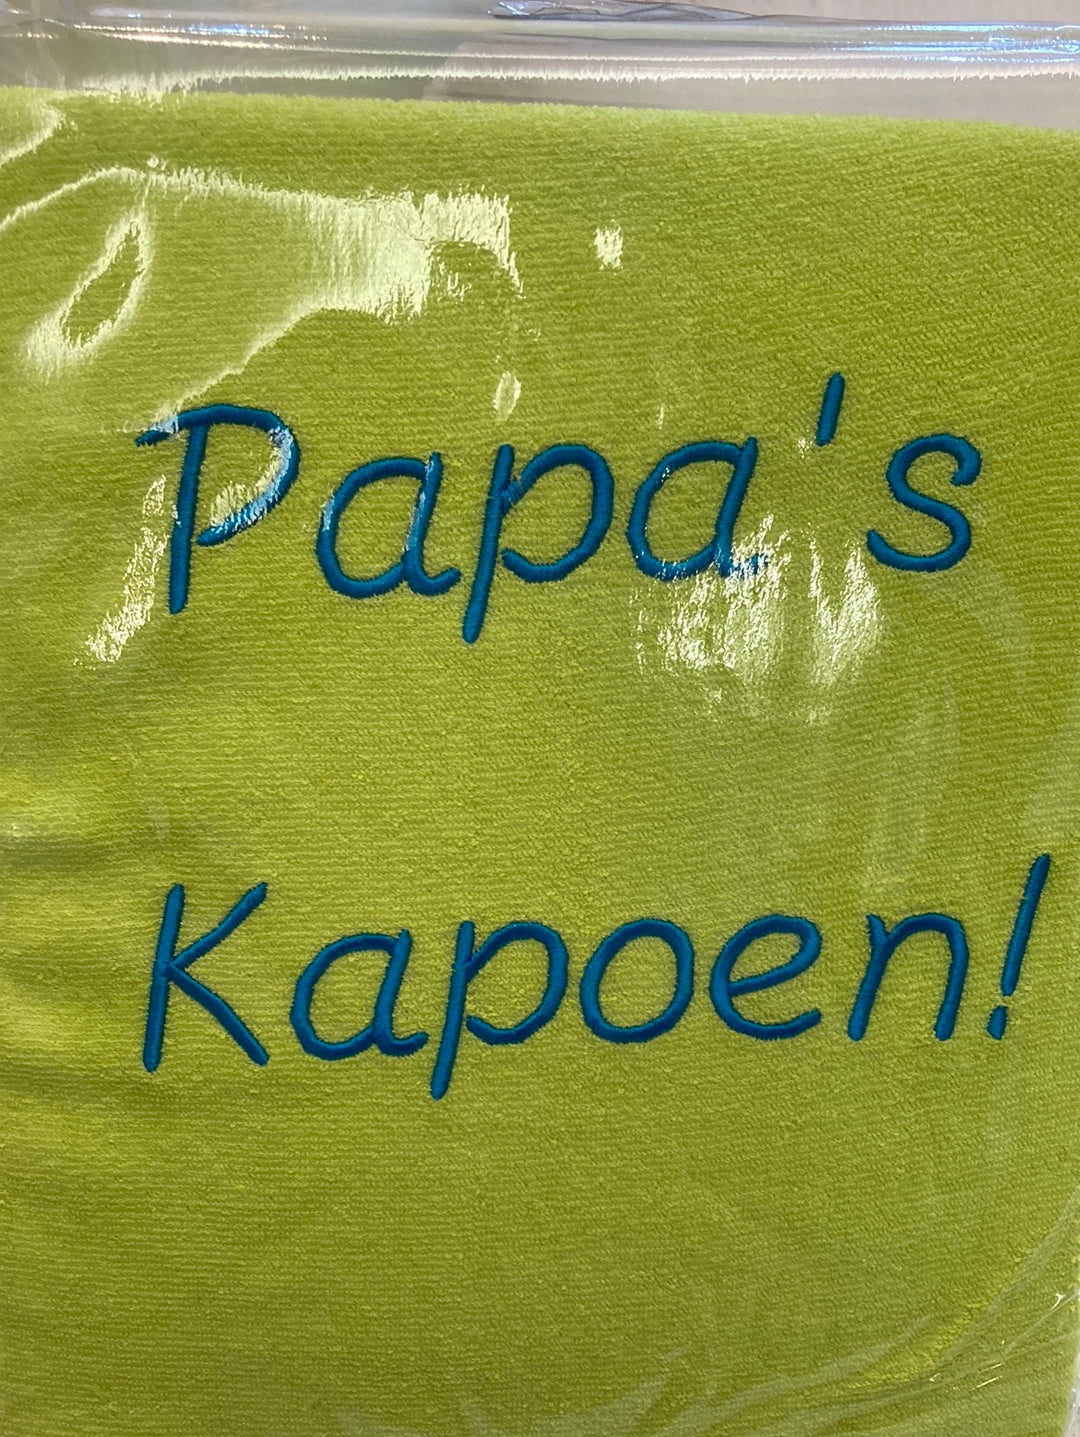 Verzorgingshoes groen papa’s kapoen! 🛒